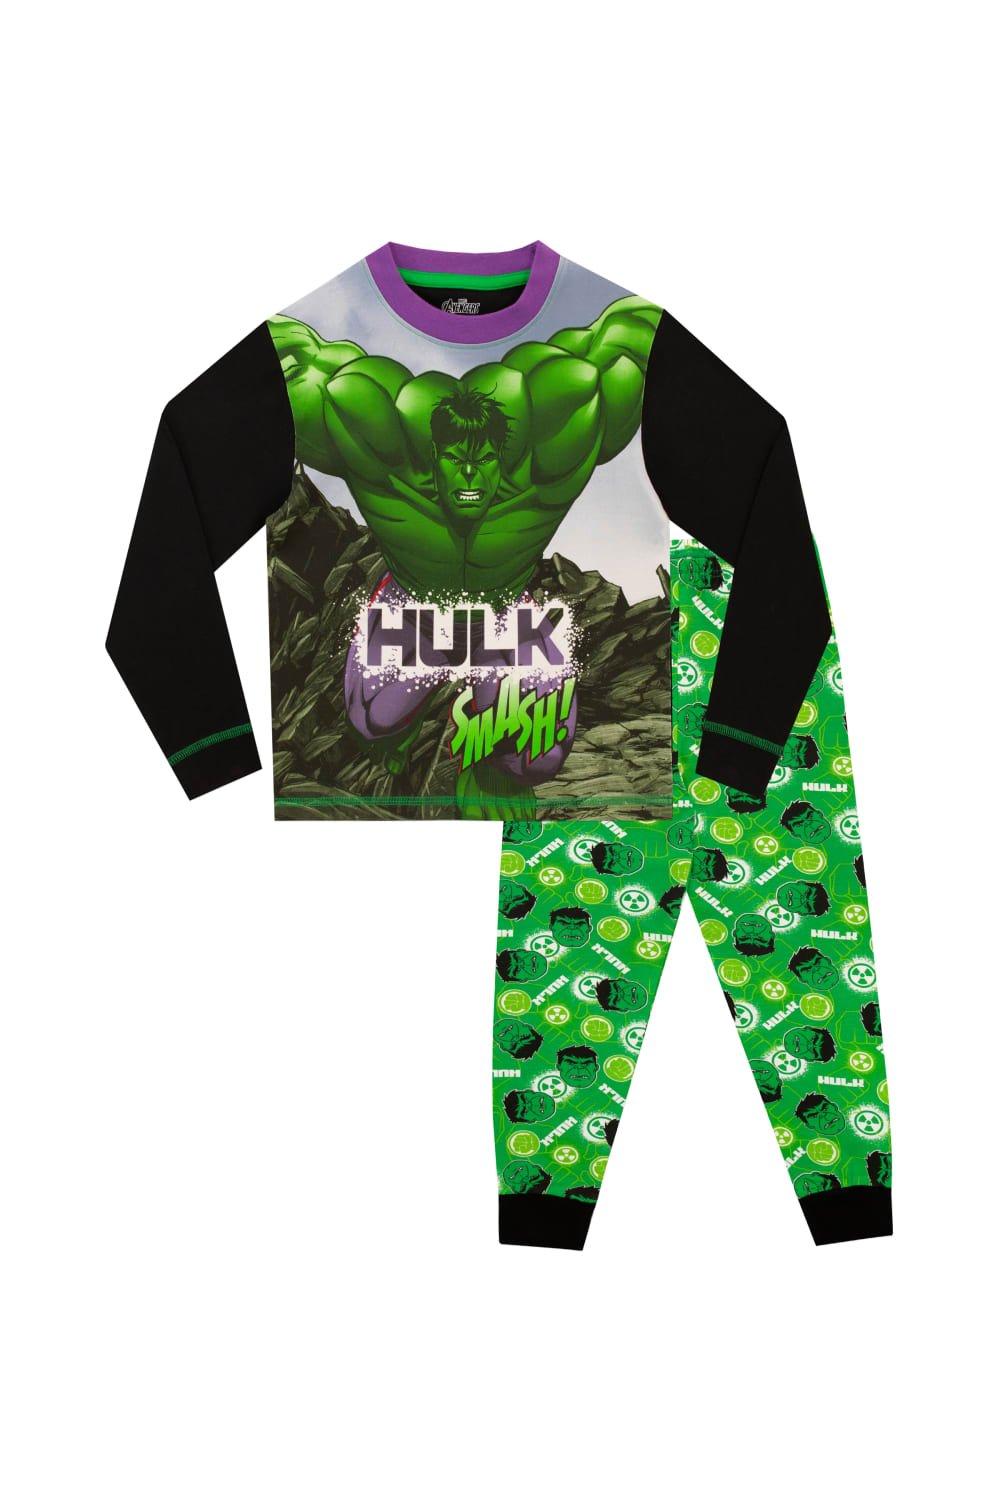 Incredible Hulk Pyjamas